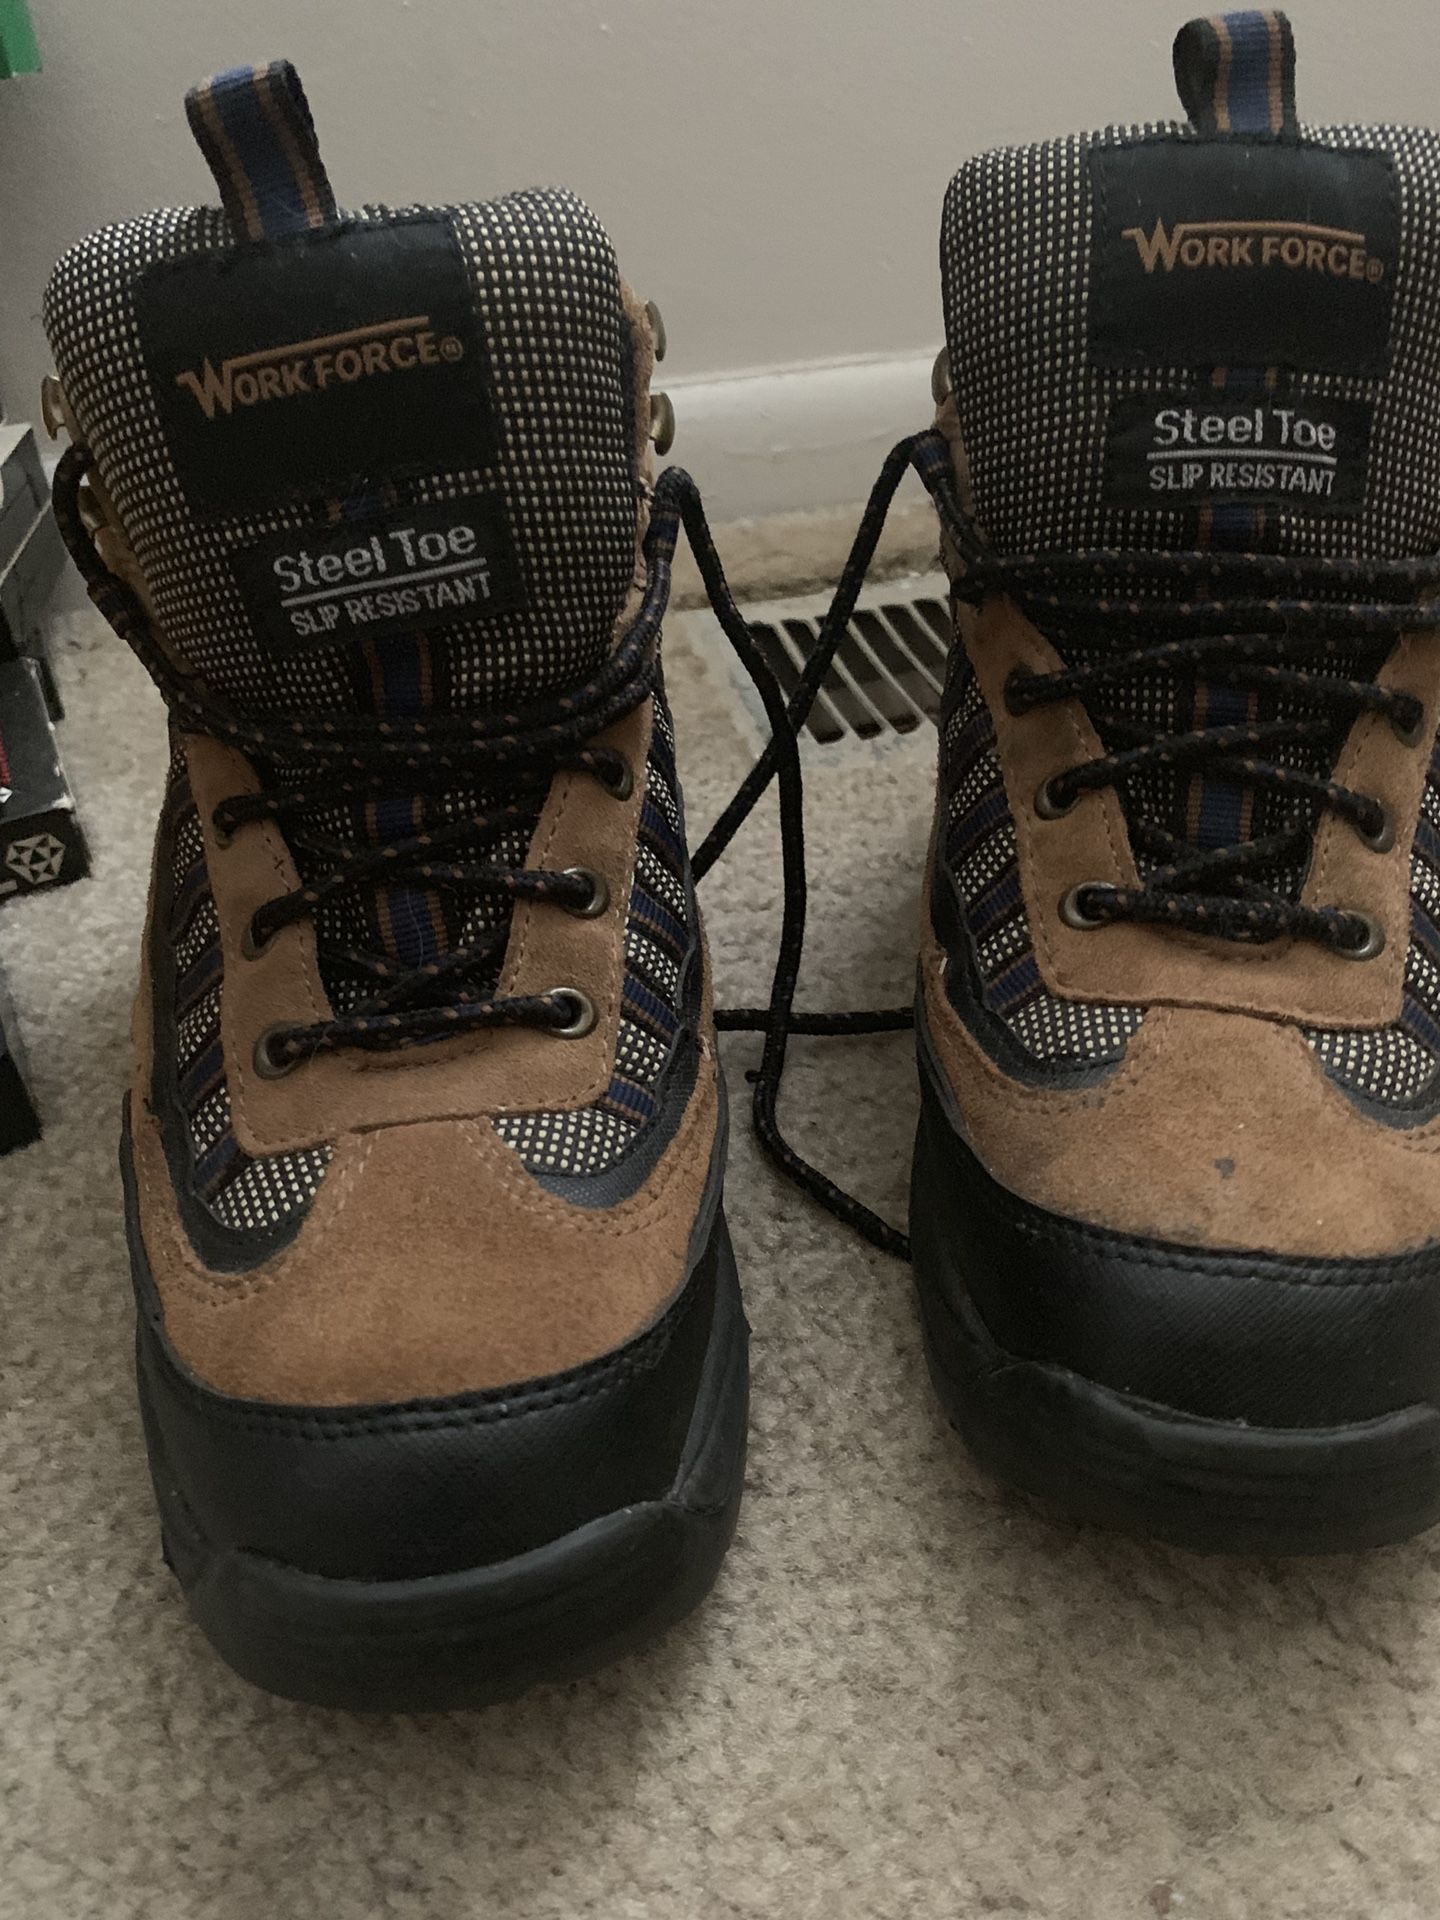 Men’s Workforce size 6 1/2 Steel Toe Slip Resistant Boots